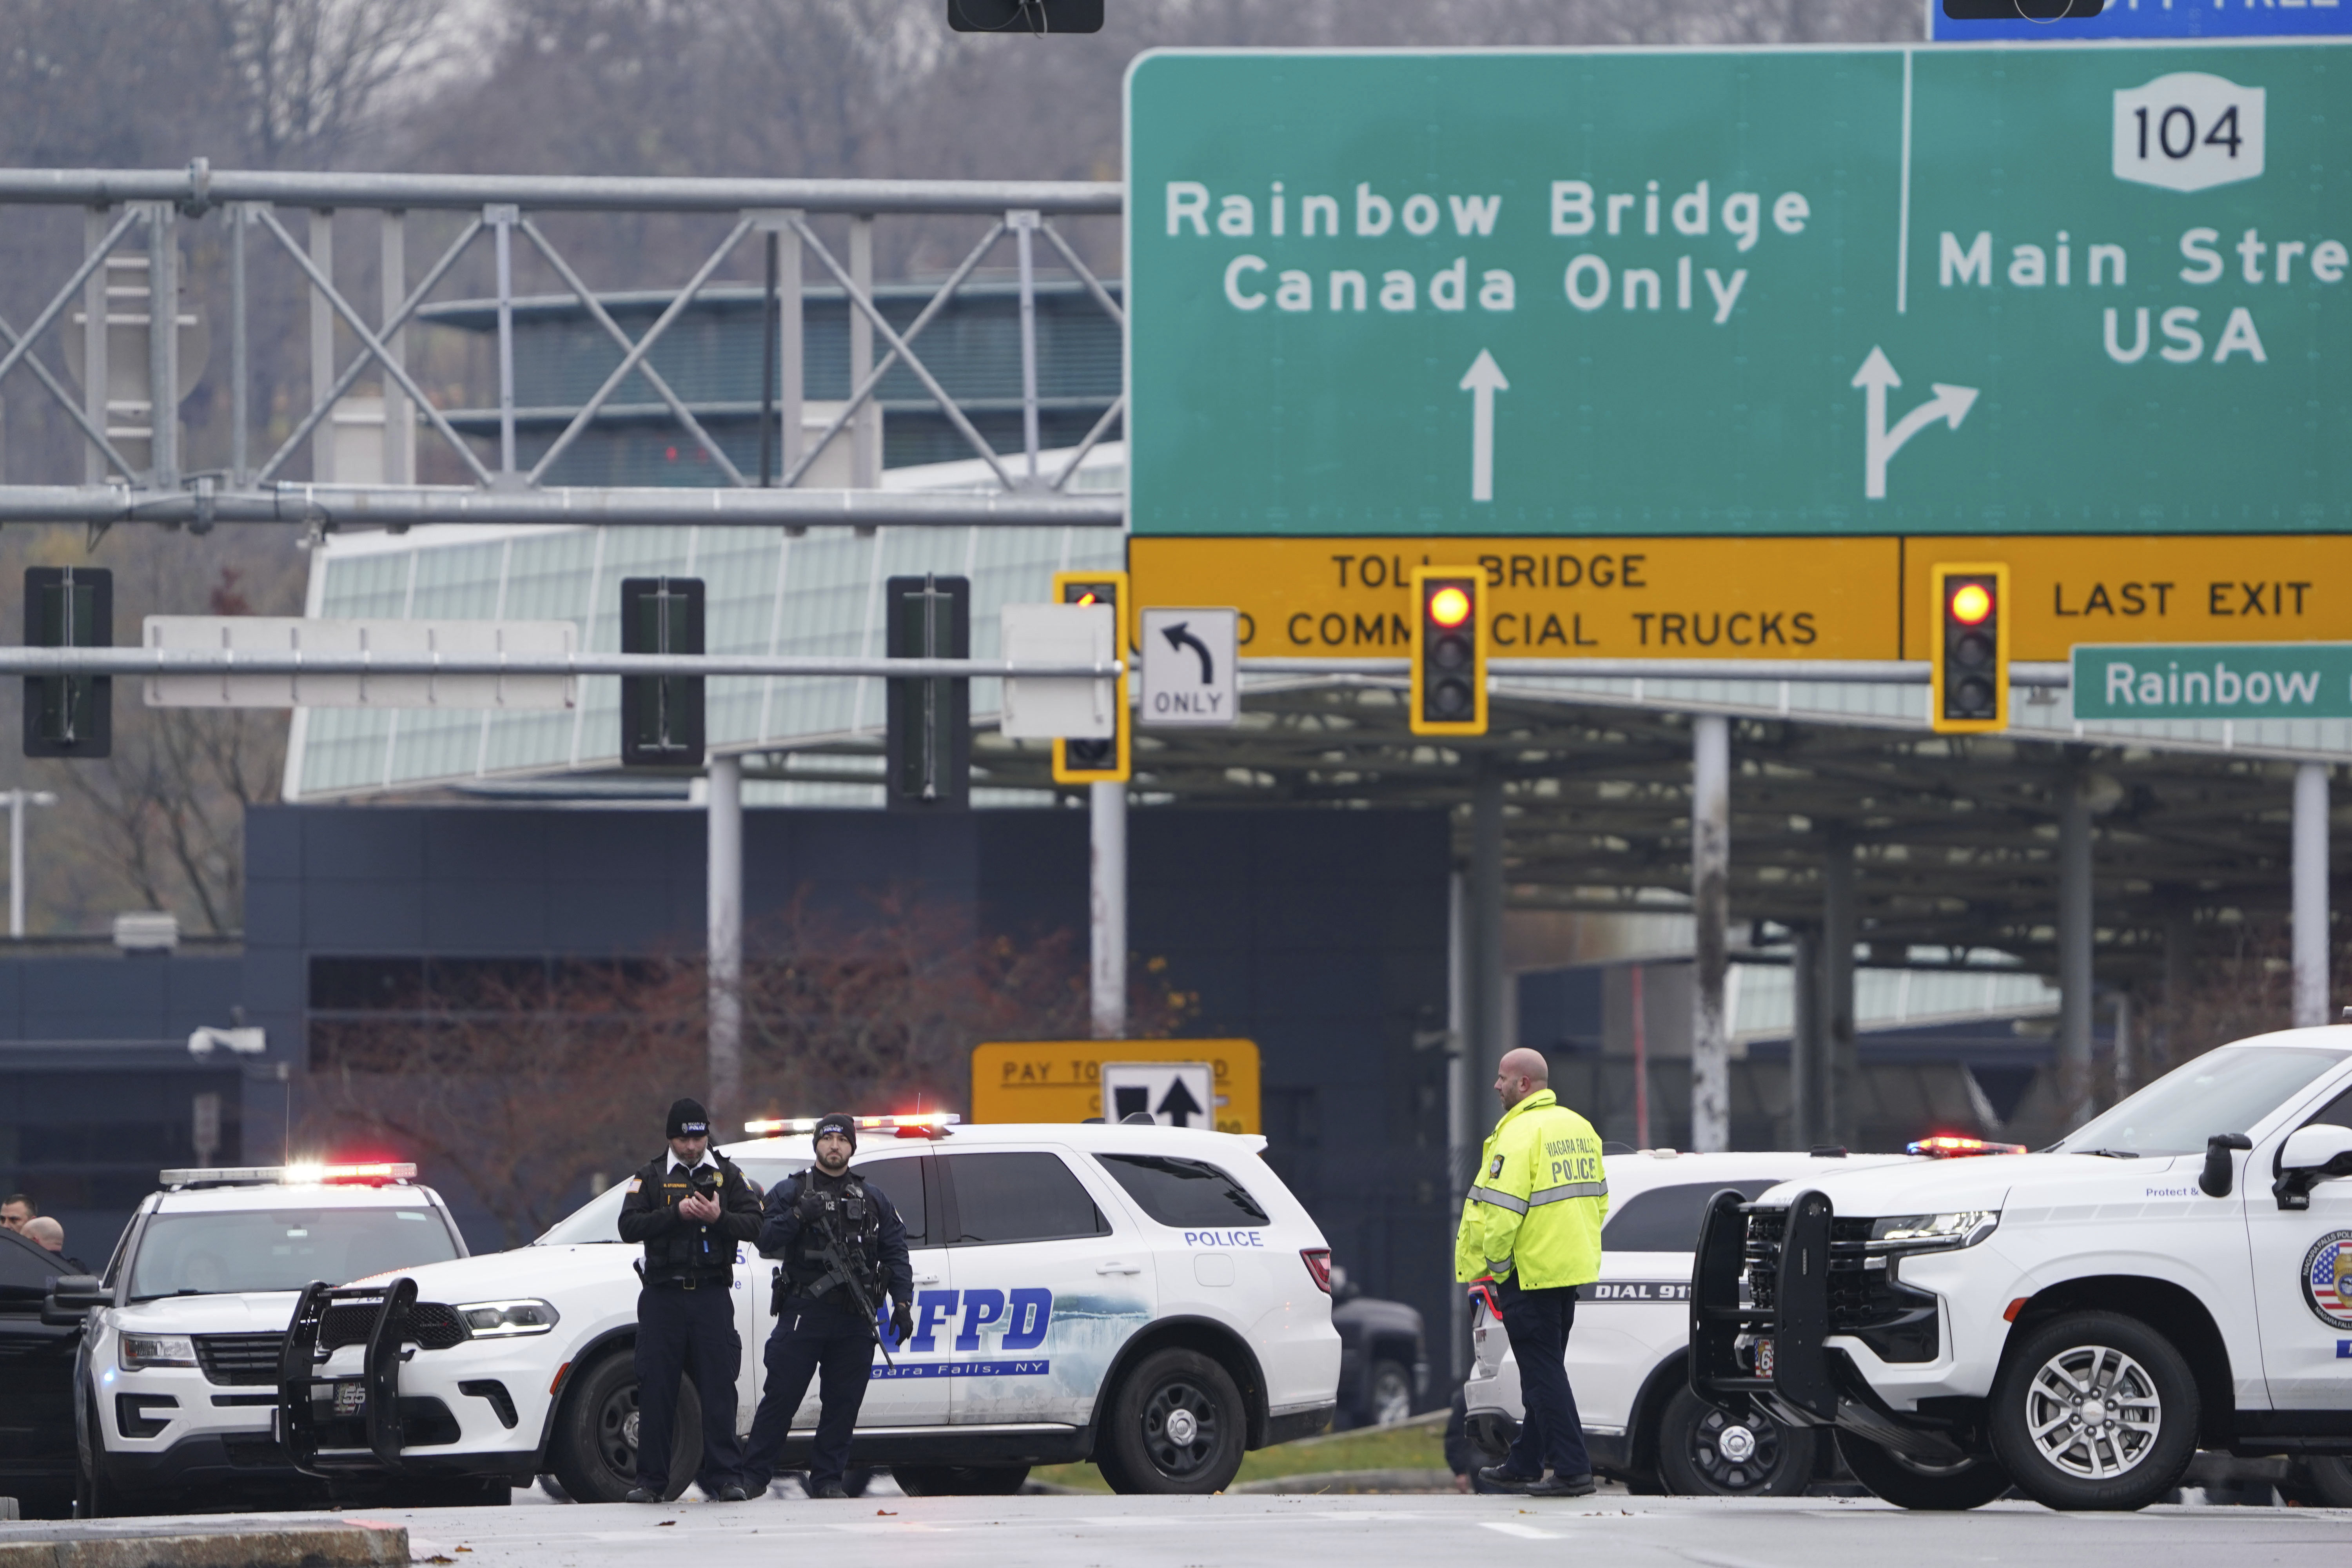 Police identify couple involved in Rainbow Bridge explosion